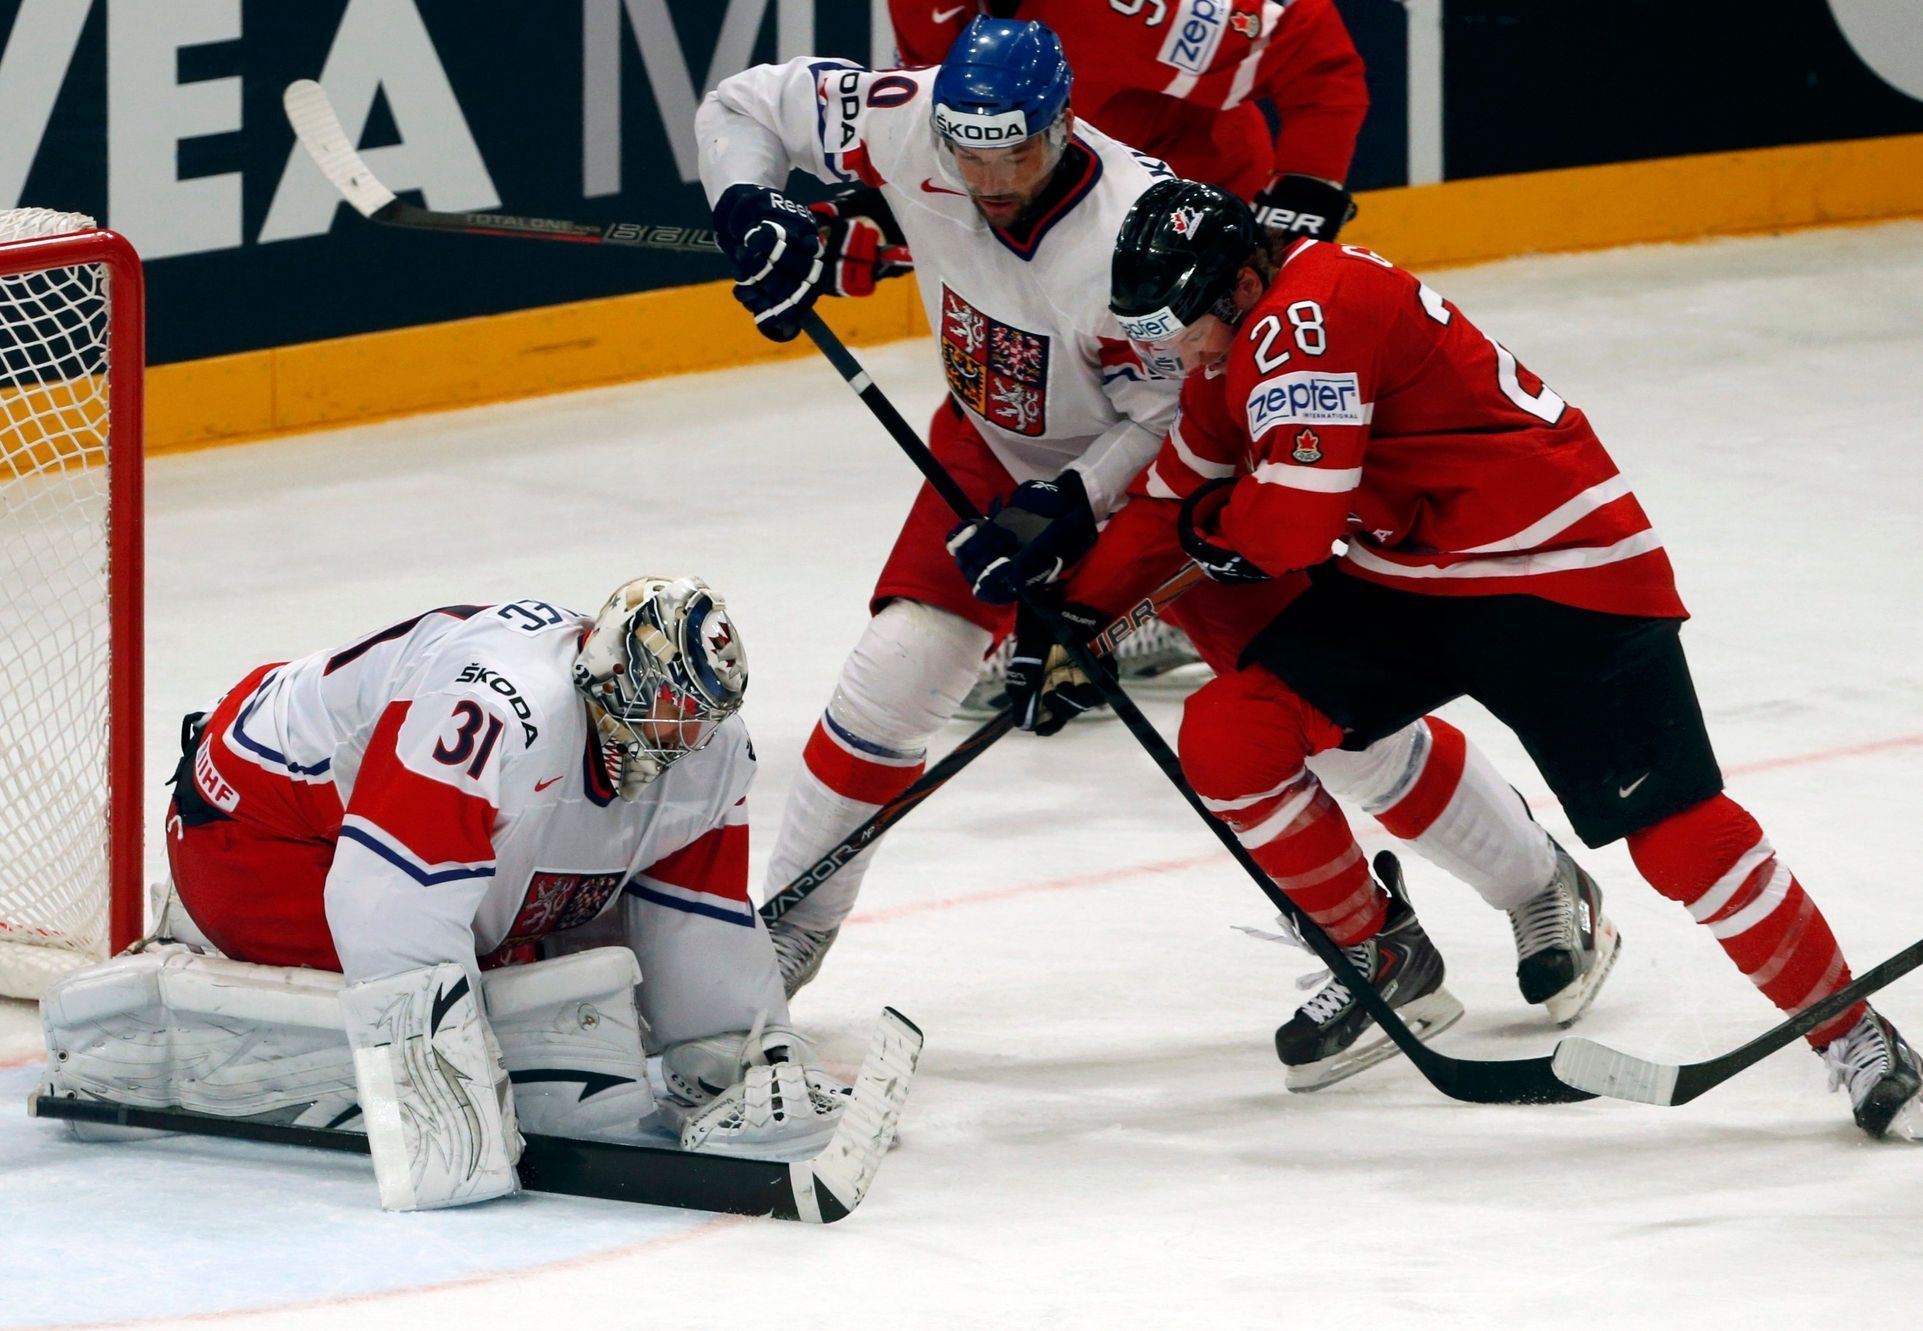 Hokej, MS 2013, Česko - Kanada: Ondřej Pavelec a Zdeněk Kutlák - Claude Giroux